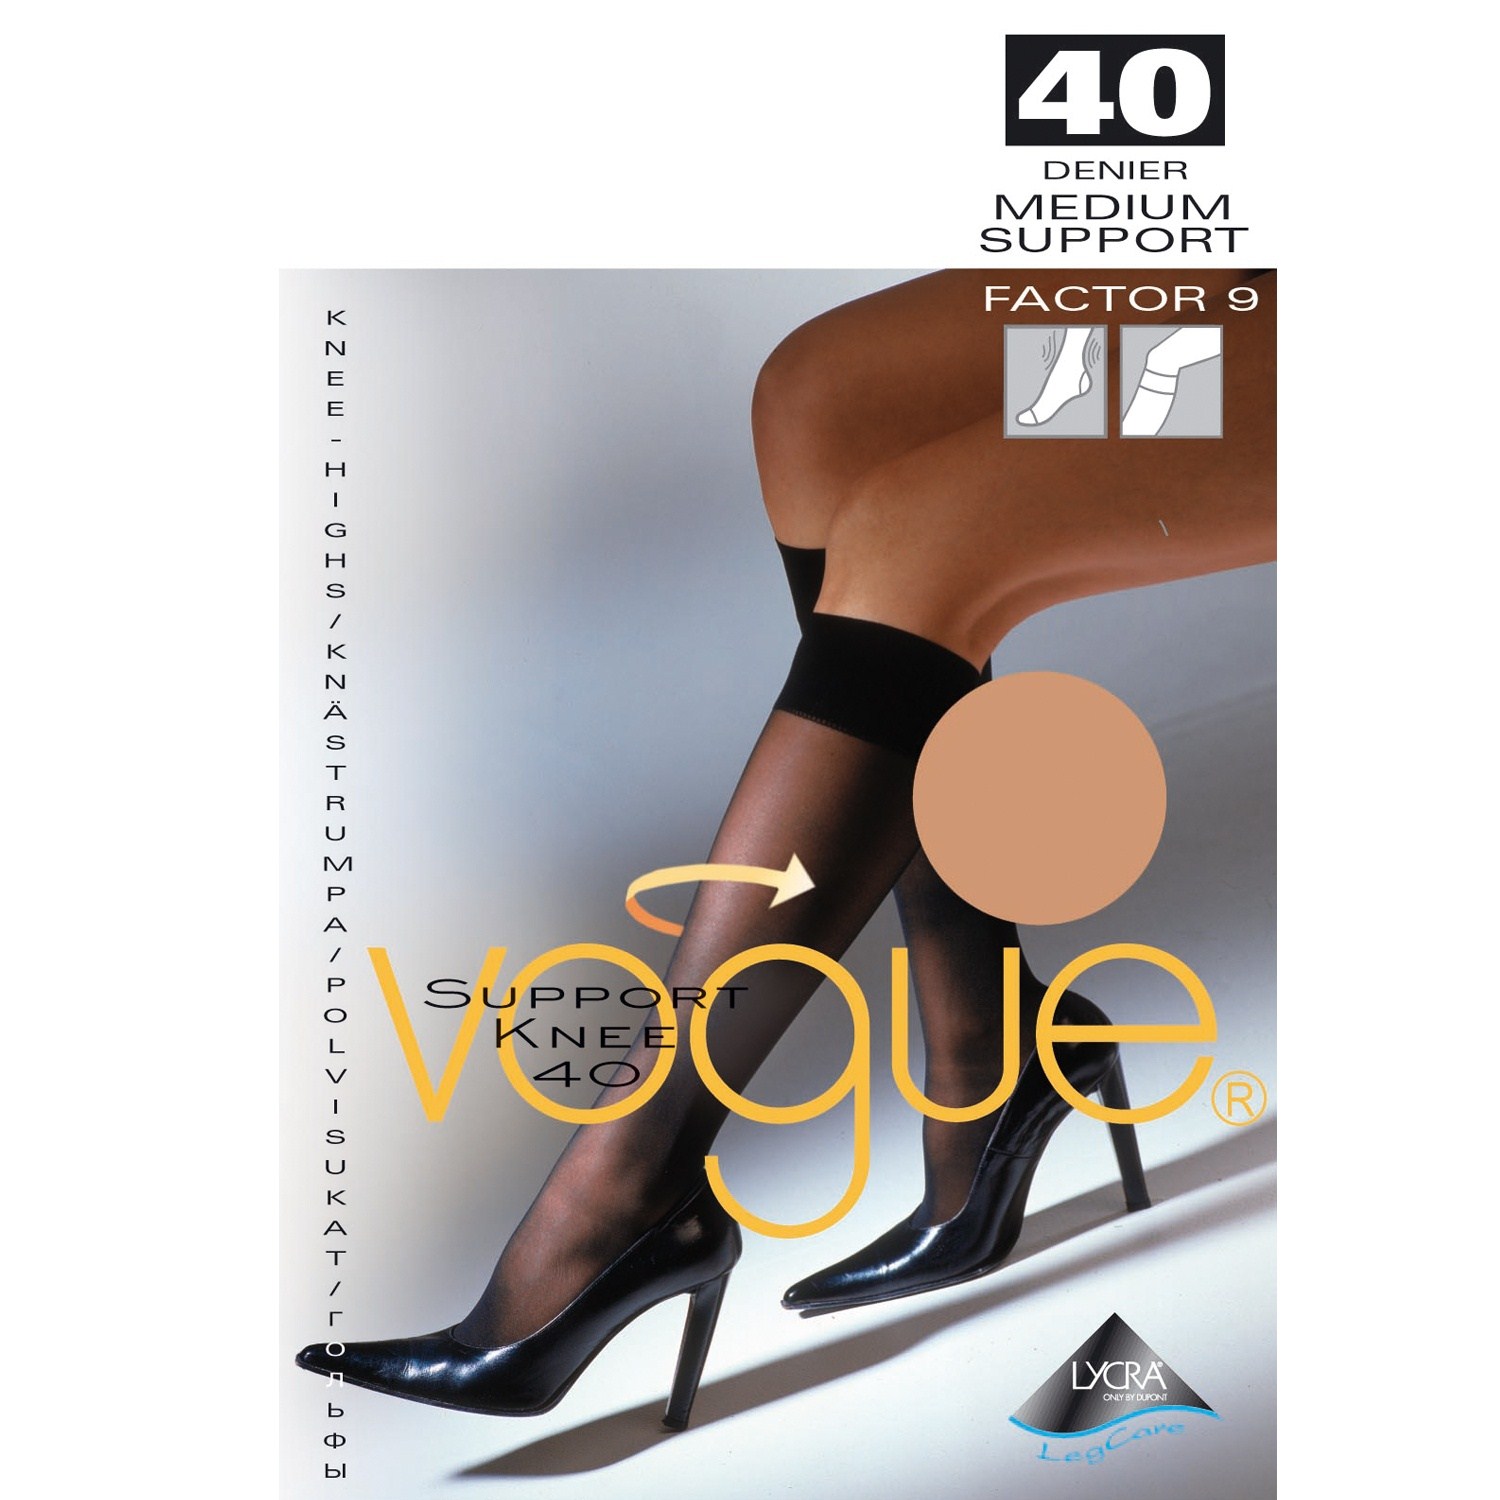 Vogue 3800 Support Knee 40 den